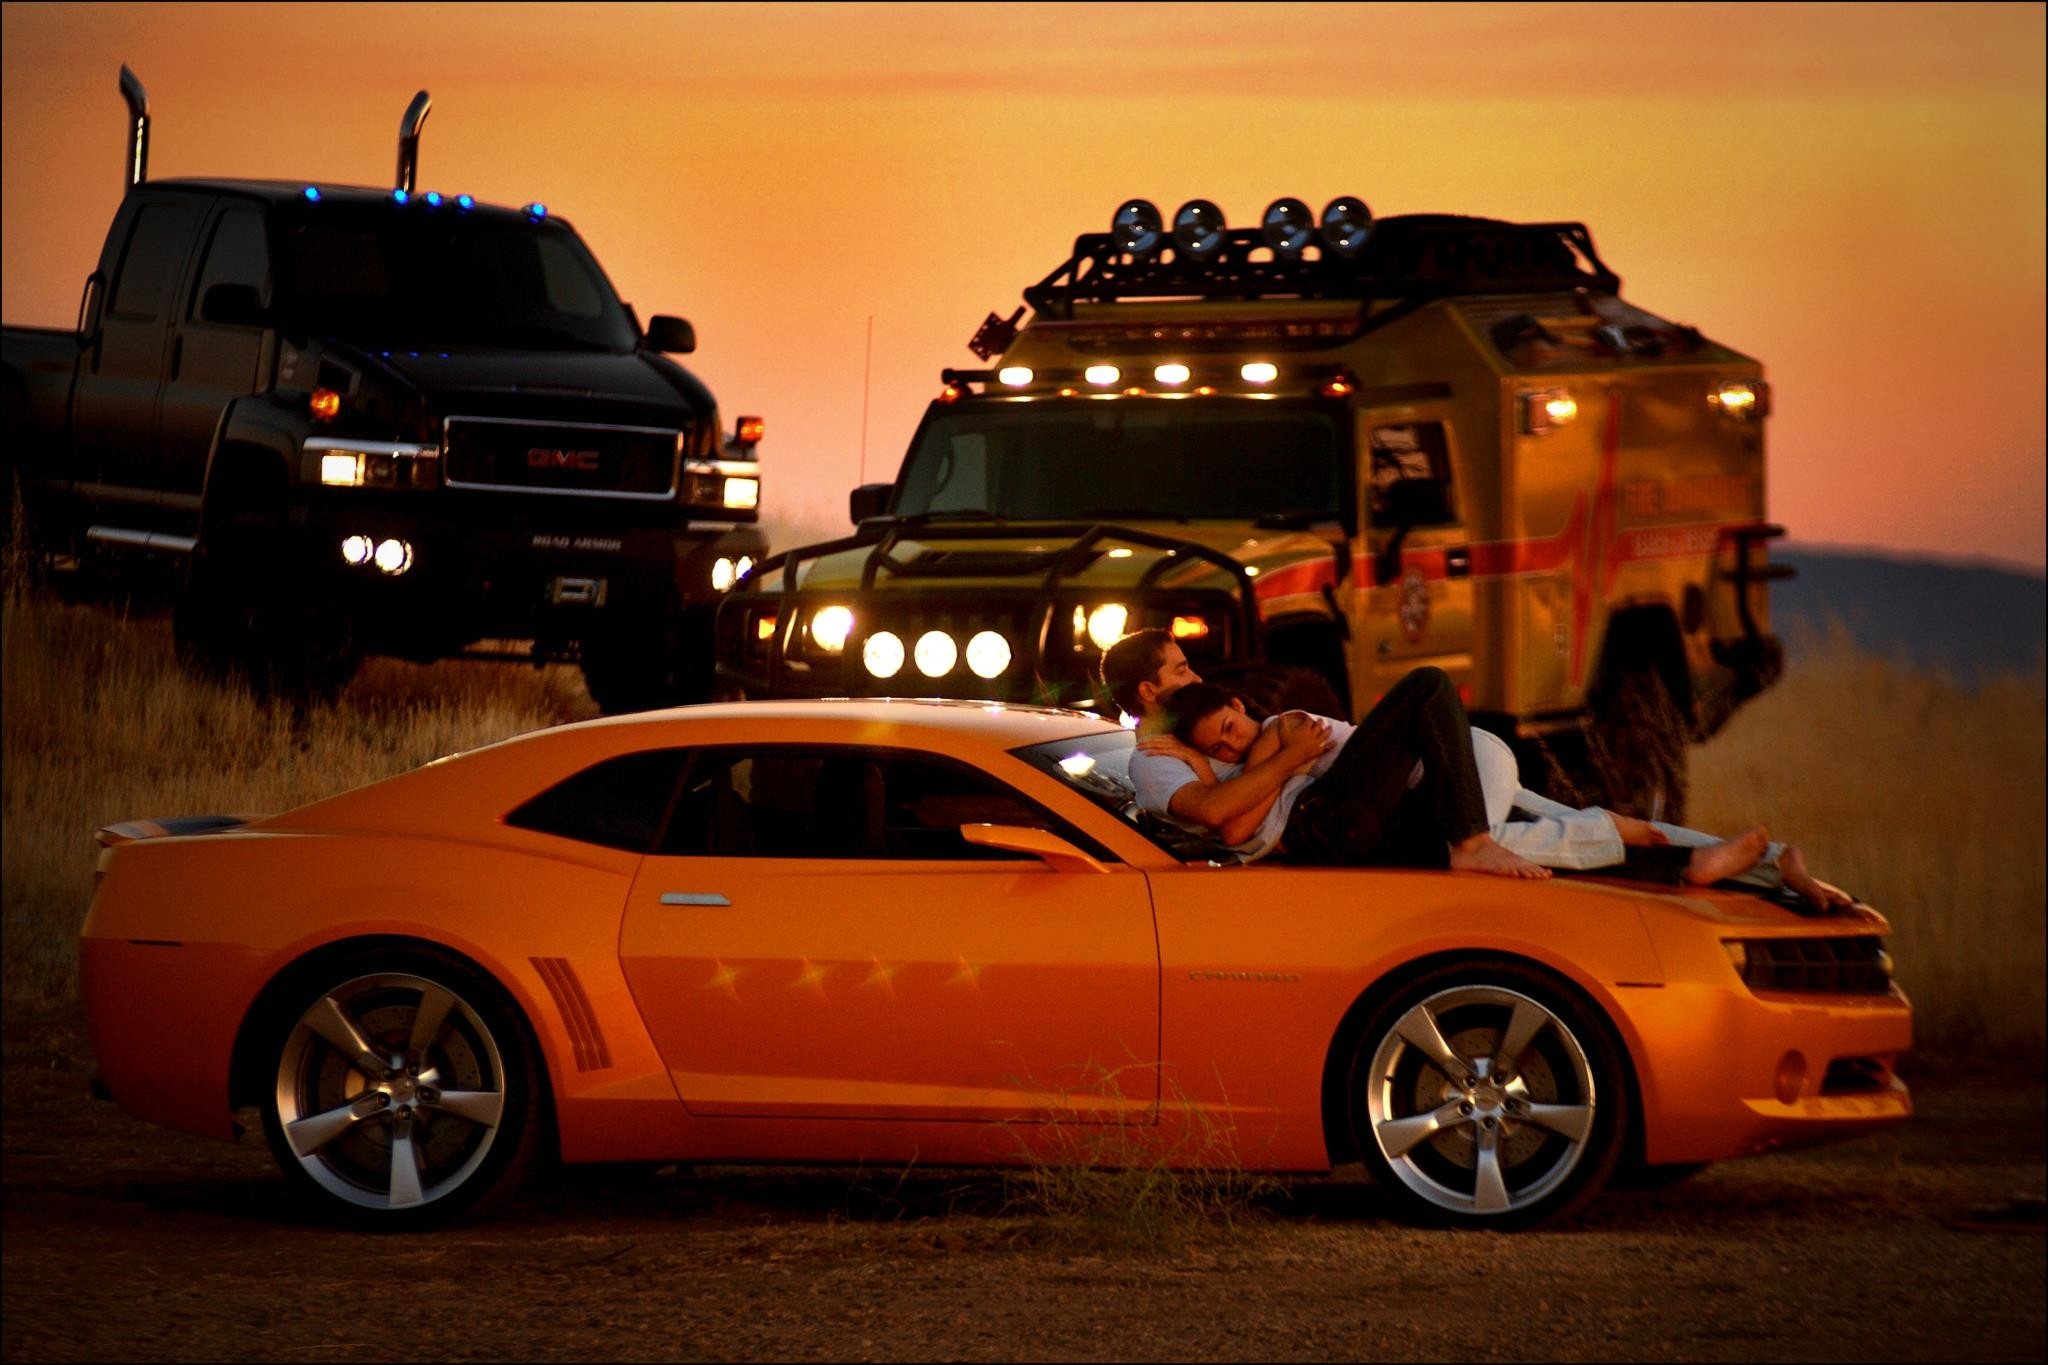 Sunset Transformers Megan Fox Cars Trucks Gmc Bumblebee Hummer